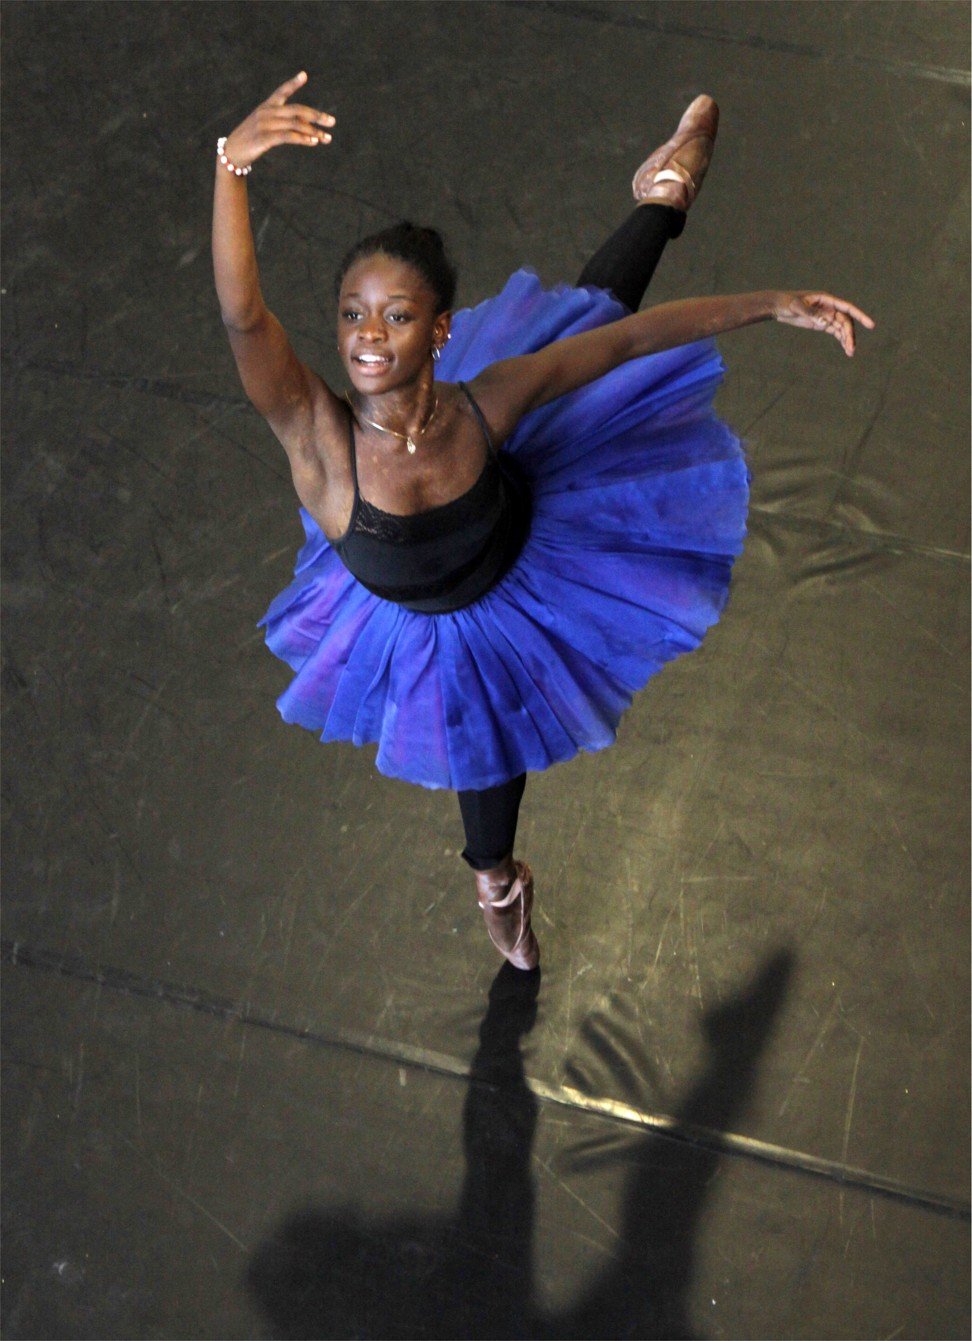 Ballet dancer Michaela DePrince rehearses in Johannesburg, South Africa. DePrince overcame a childhood in war-stricken Sierra Leone to become a world class ballerina. Photo: AP